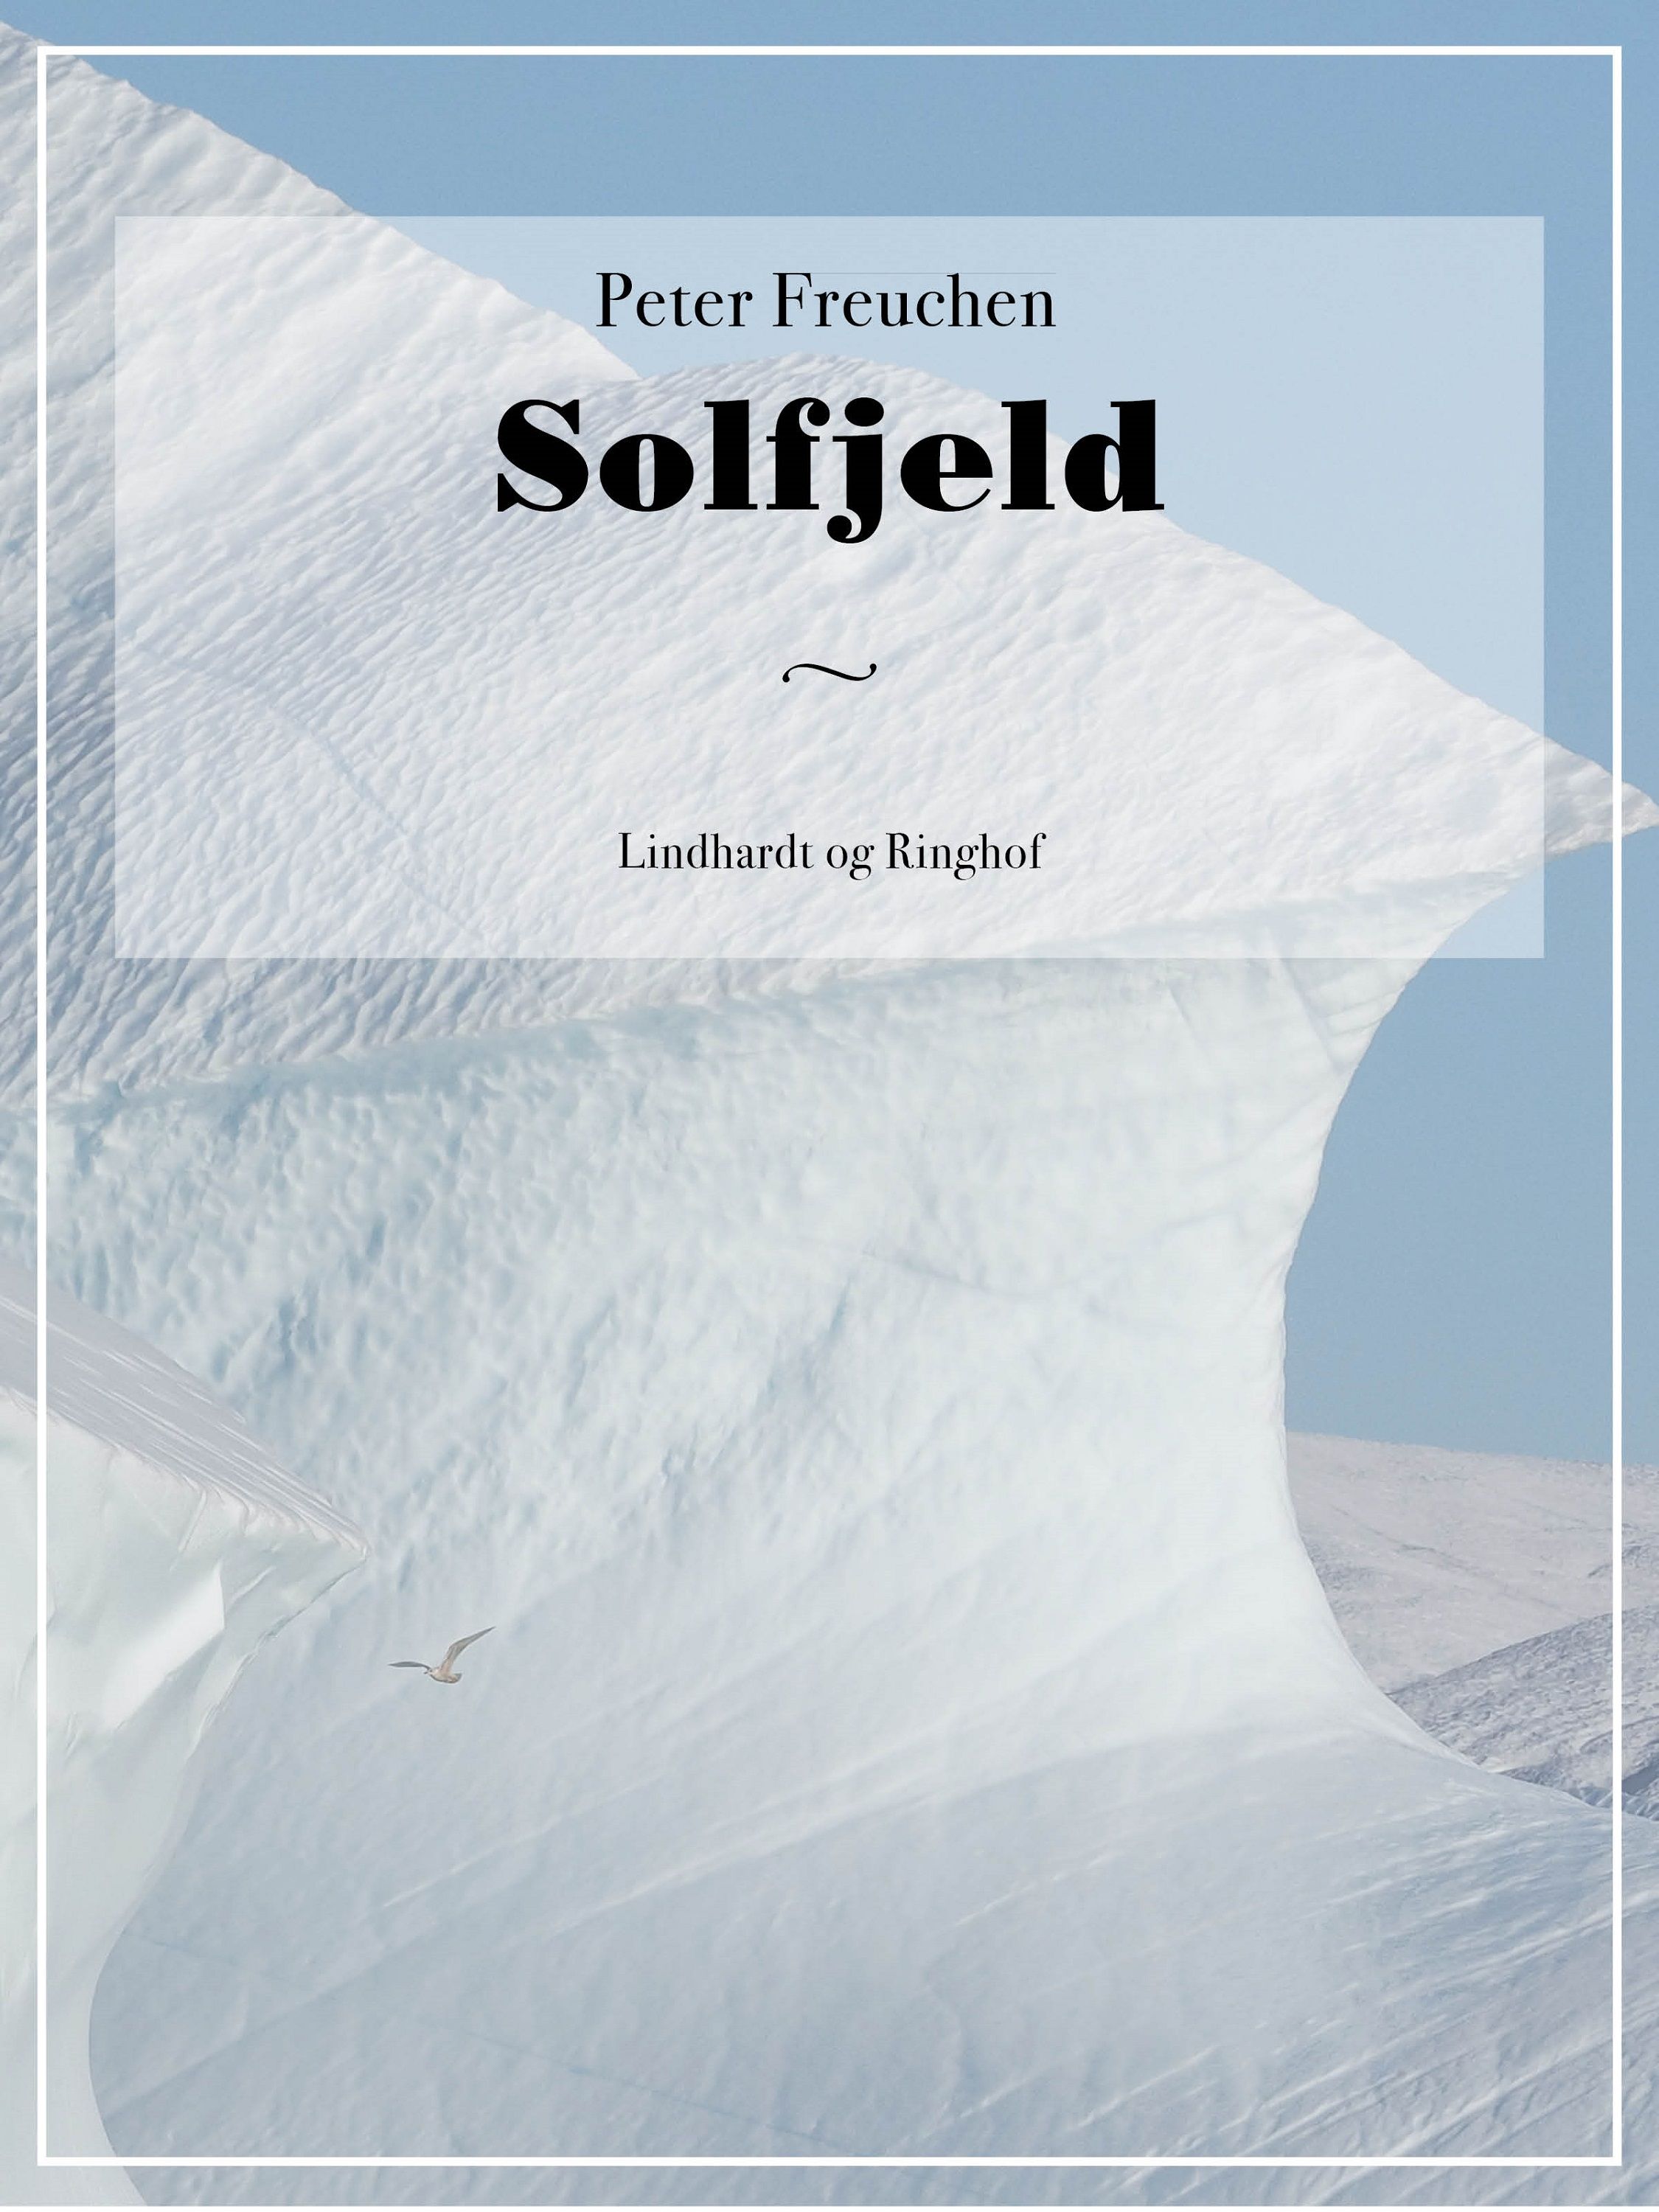 Solfjeld, audiobook by Peter Freuchen